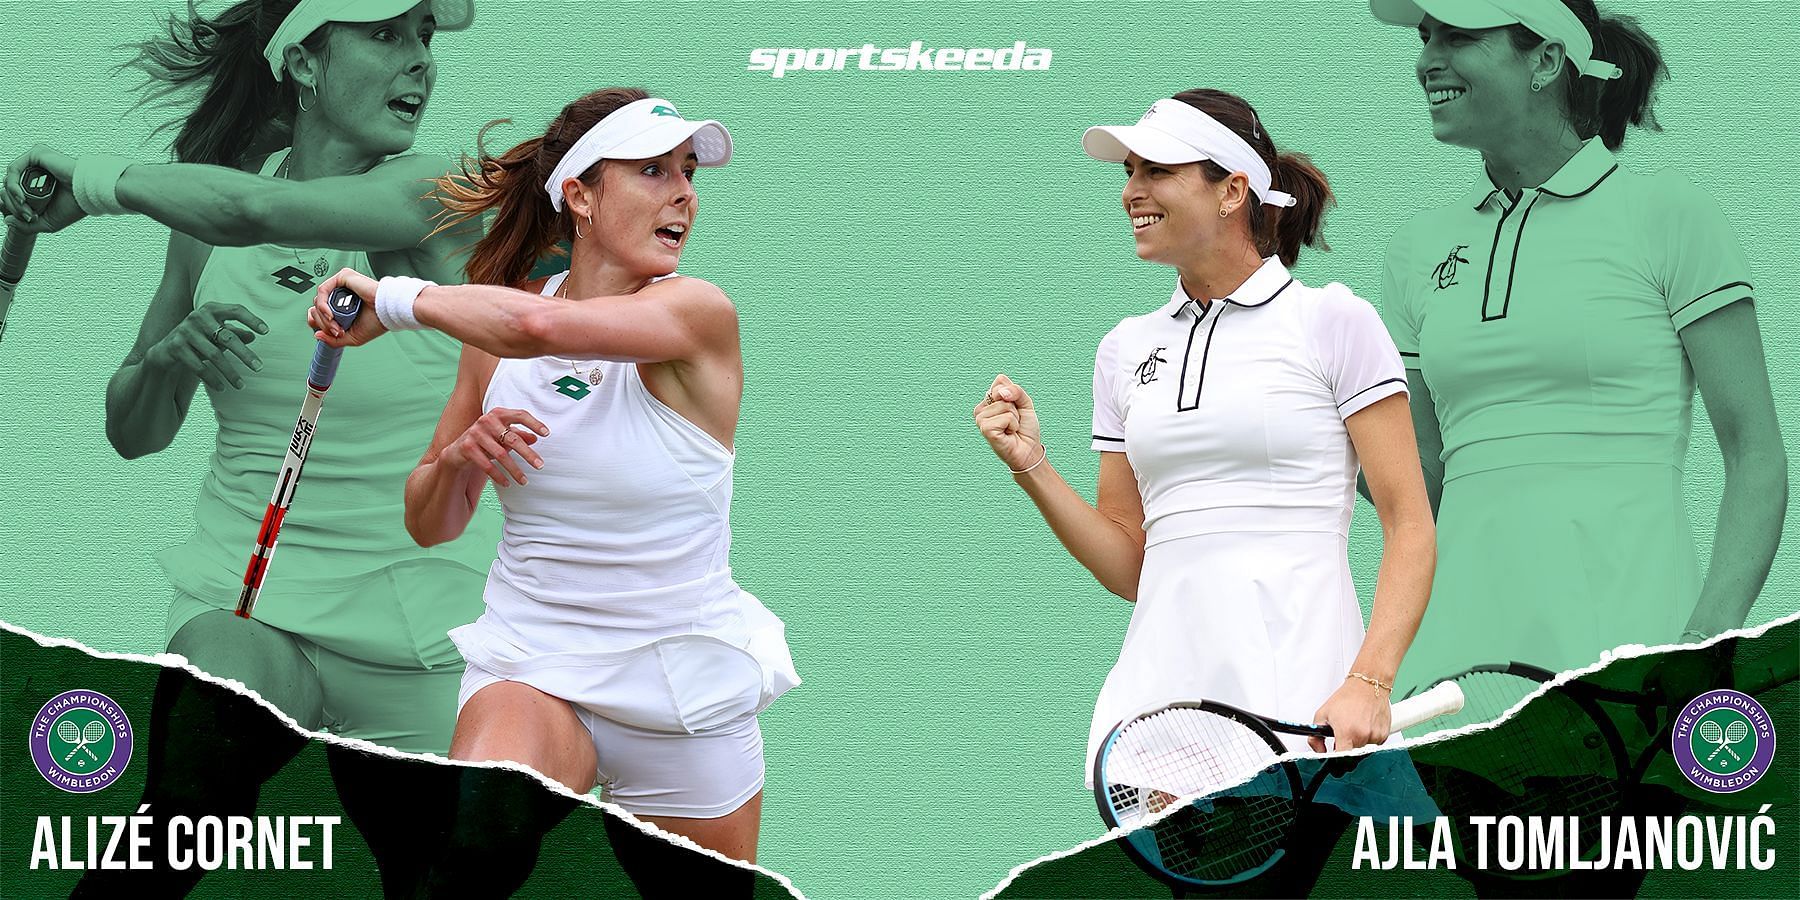 Alize Cornet will take on Ajla Tomljanovic in the fourth round of Wimbledon